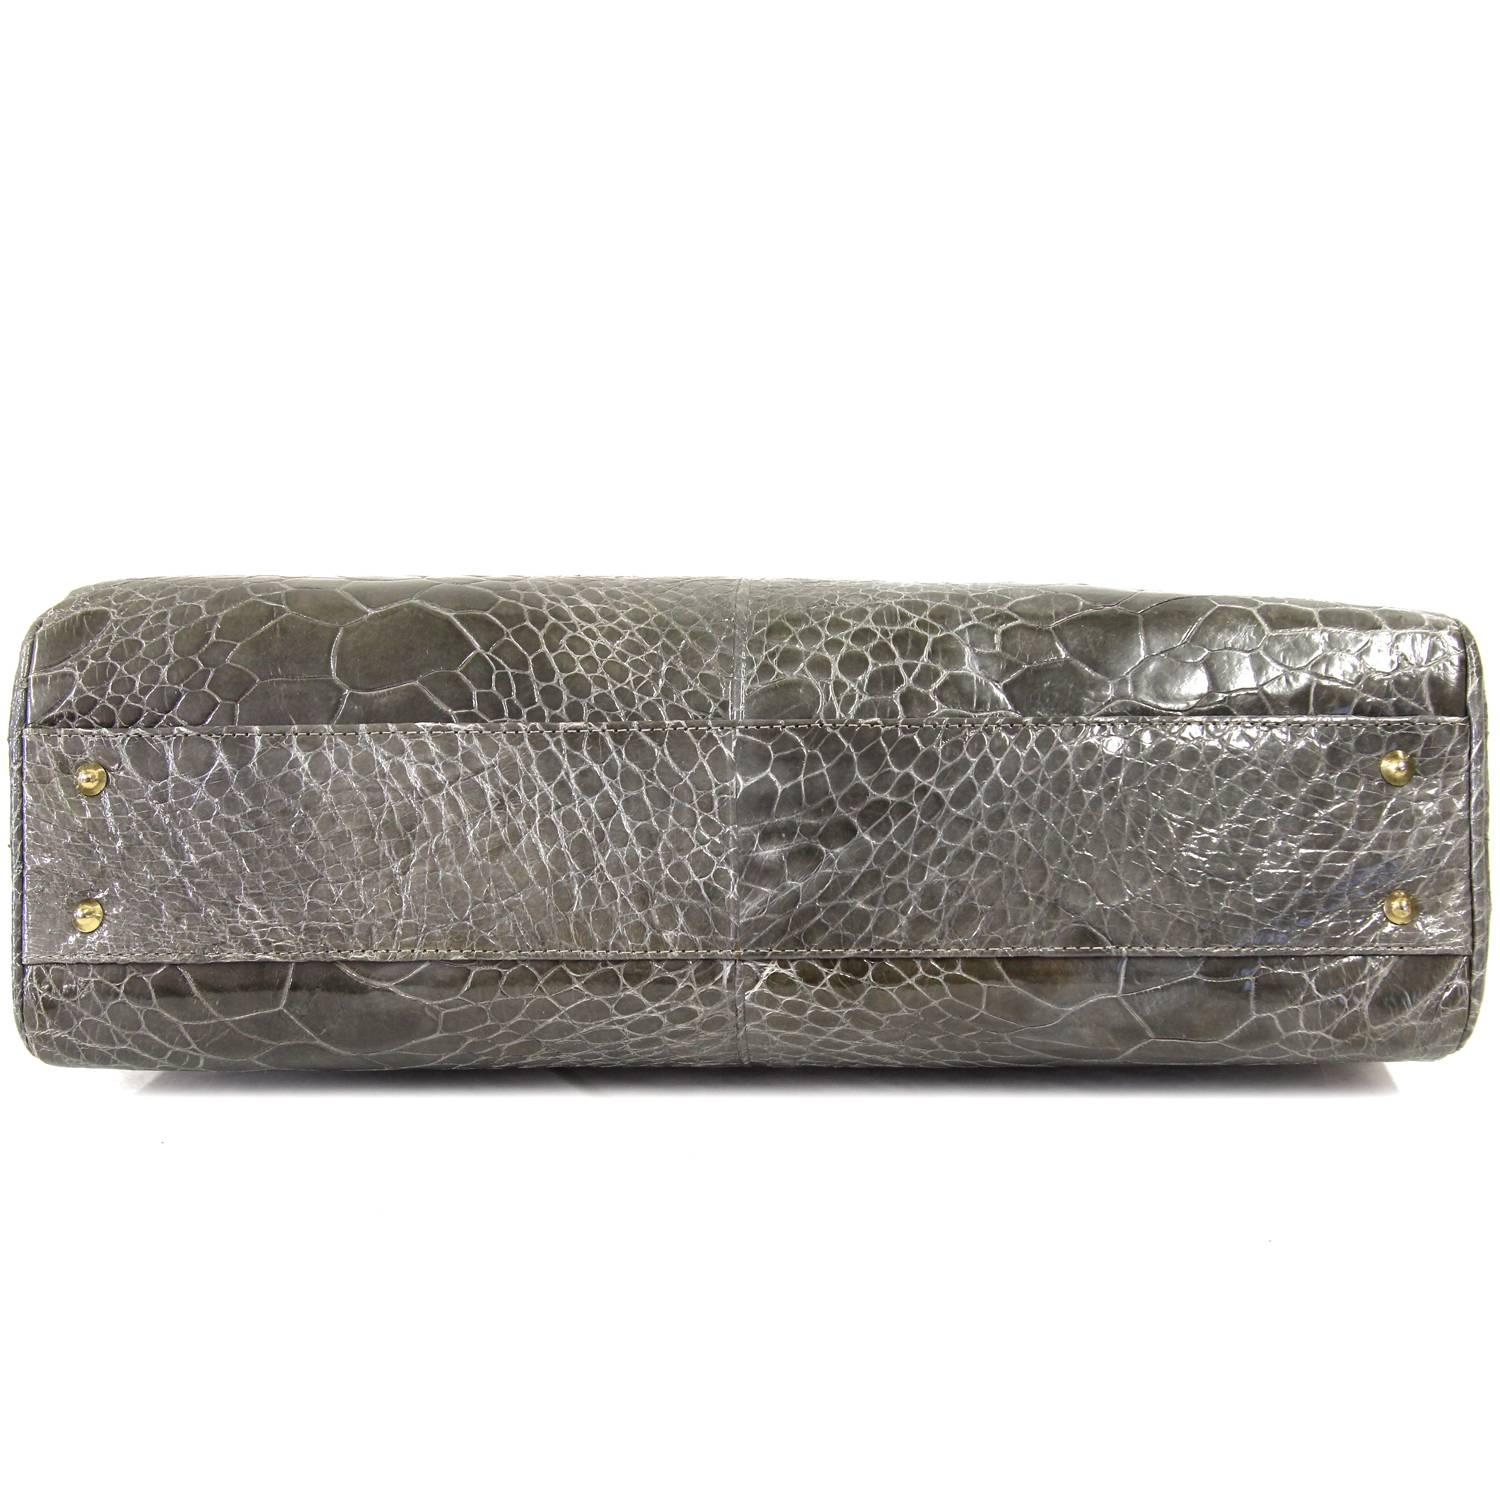 Gray 1990s Olive Green Crocodile Leather Handbag